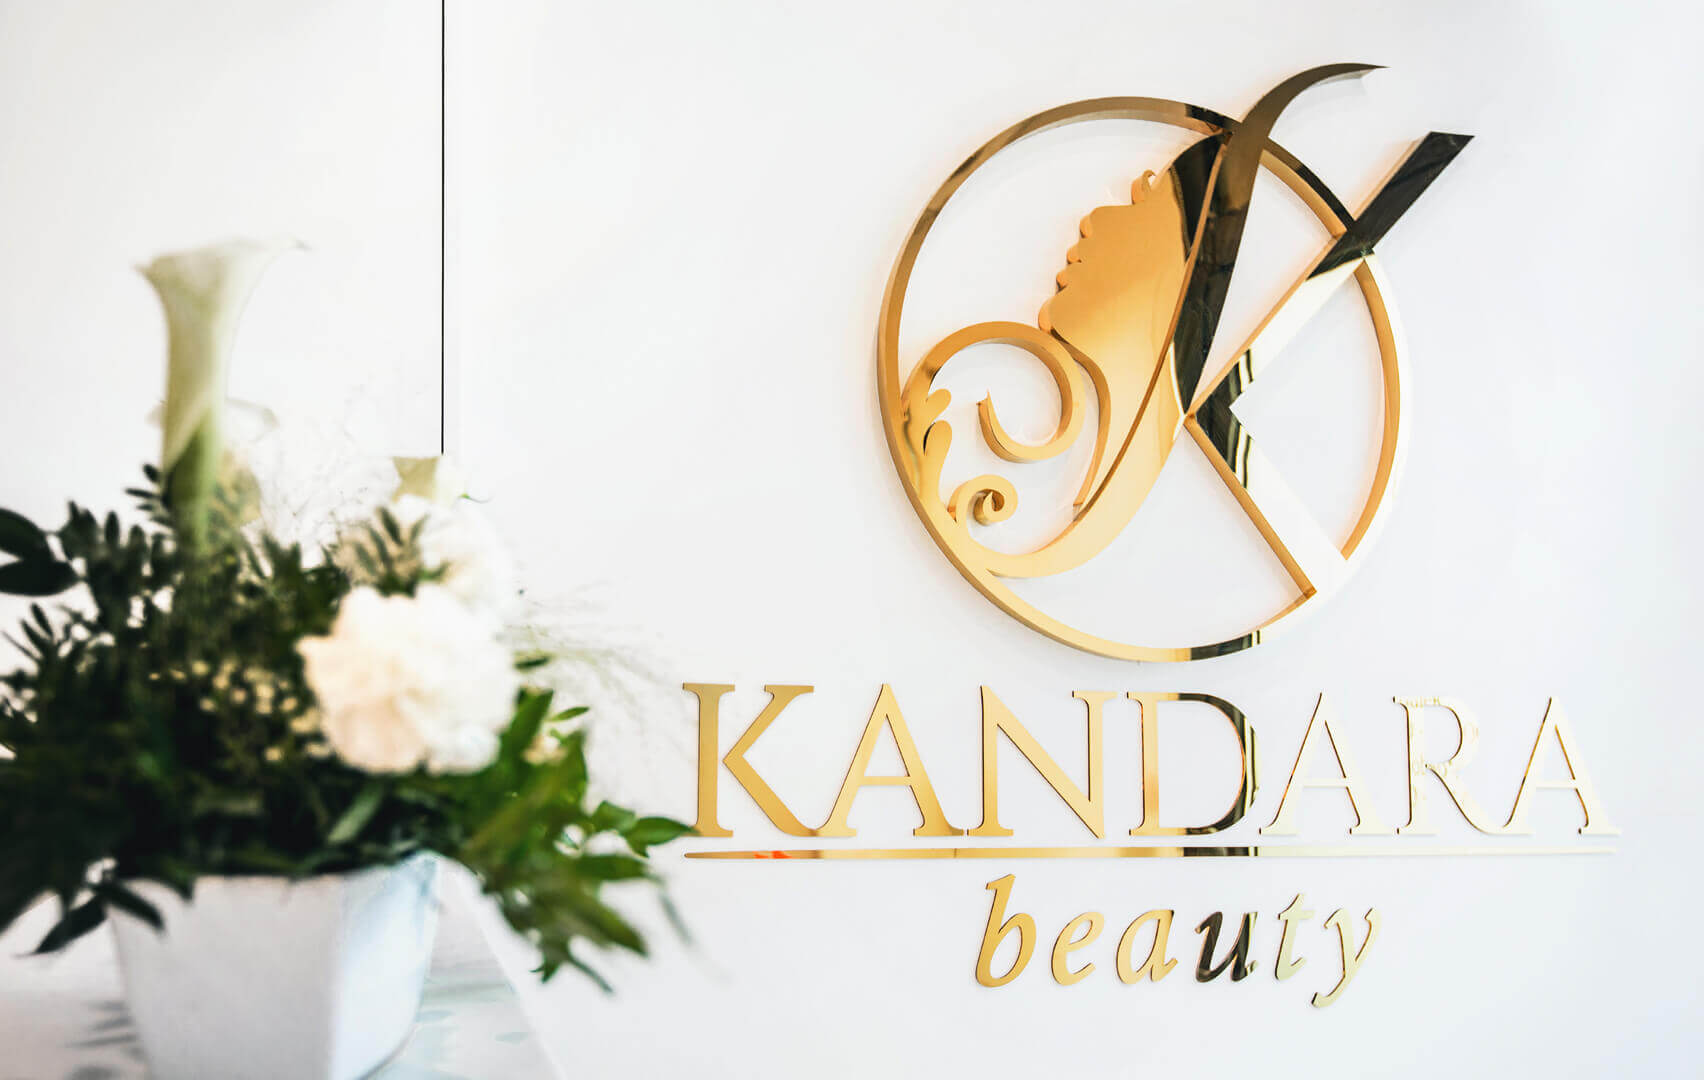 Kandara Schönheit - Logo mit Namen aus goldenem Edelstahl.